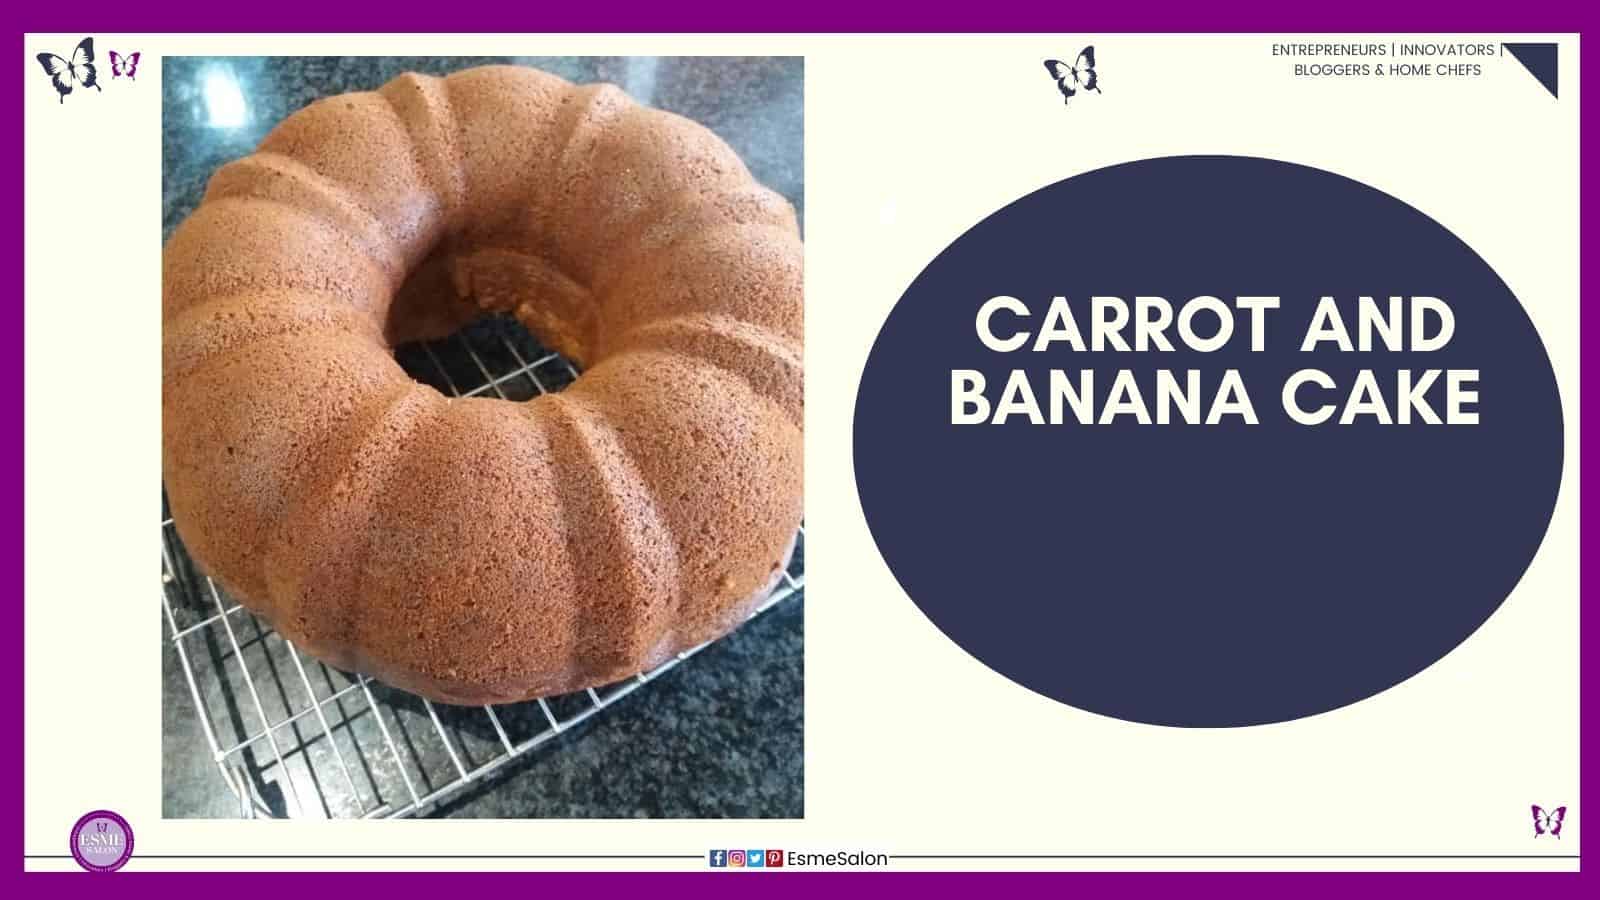 An image of a Bundt Carrot and Banana Cake